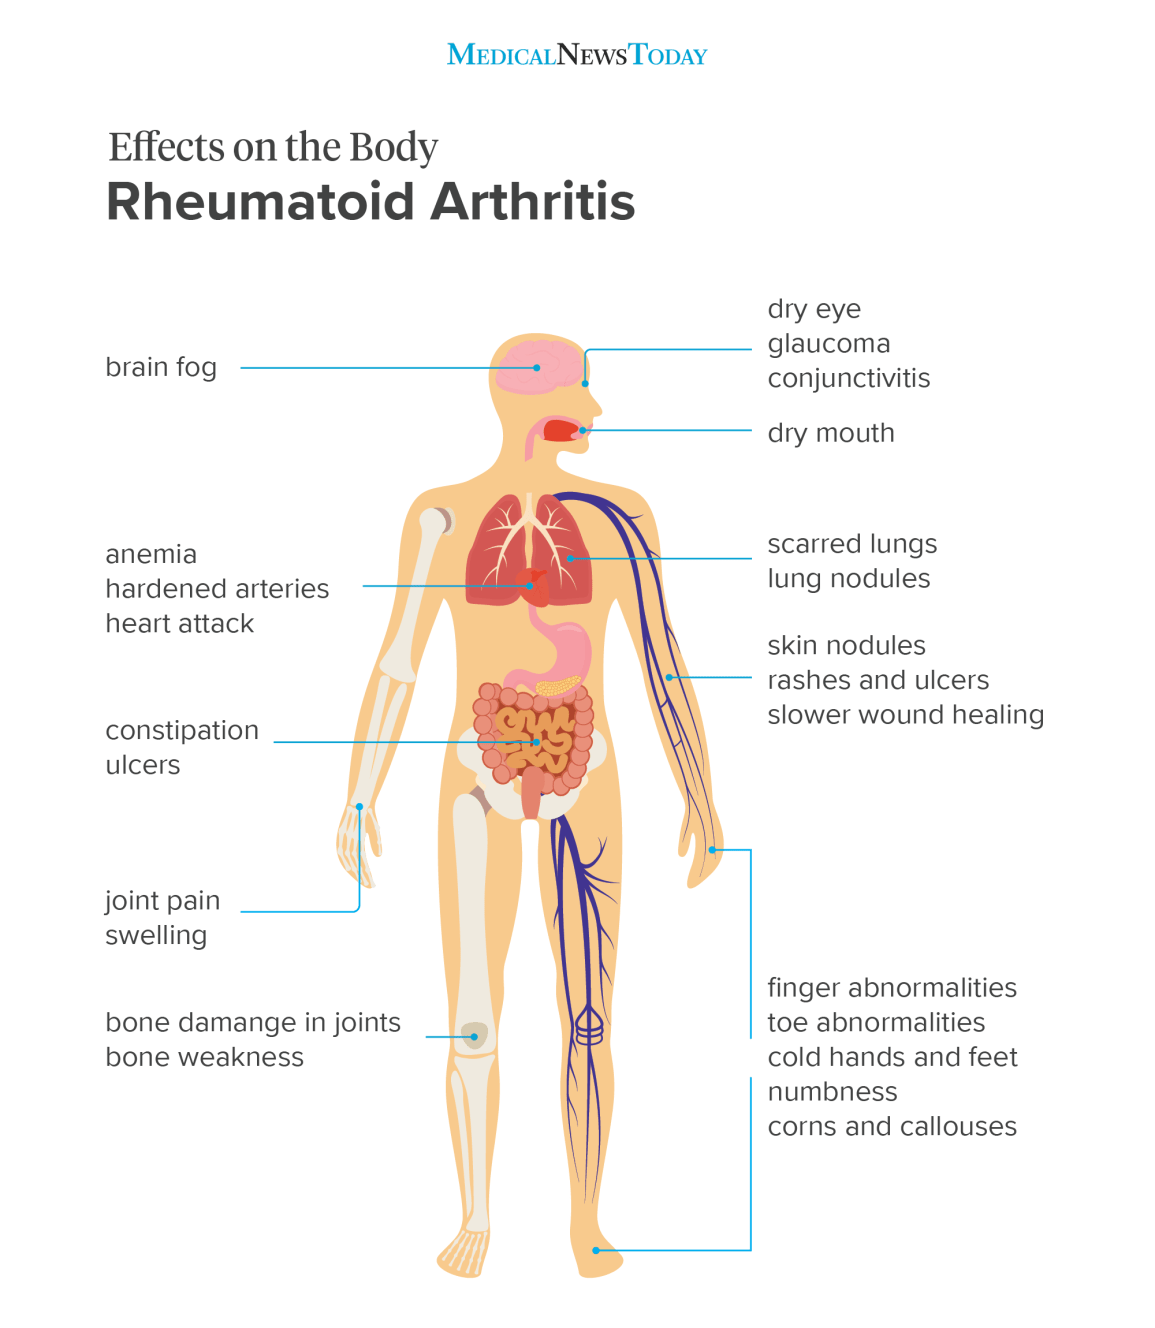 Rheumatoid arthritis (RA): Signs and symptoms